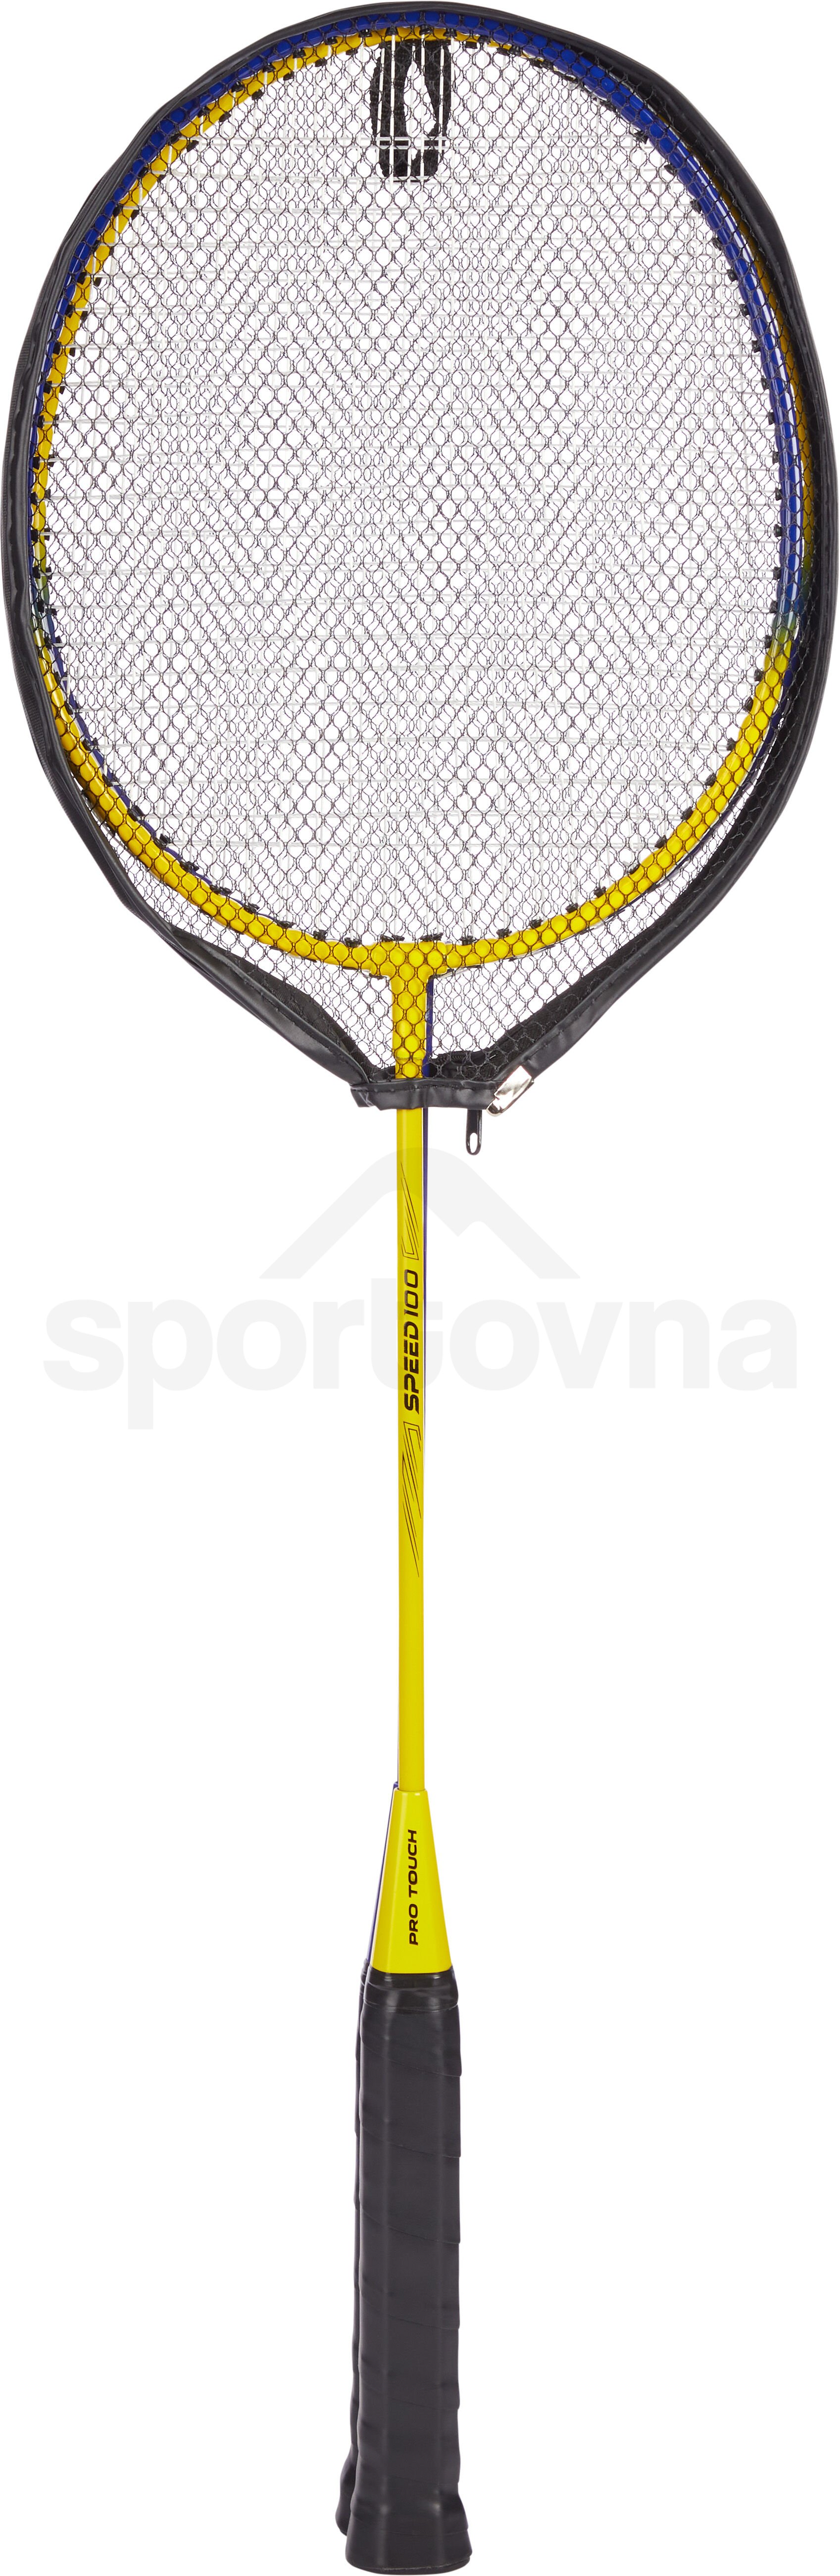 Badmintonová sada ProTouch SPEED 100 - žlutá/modrá